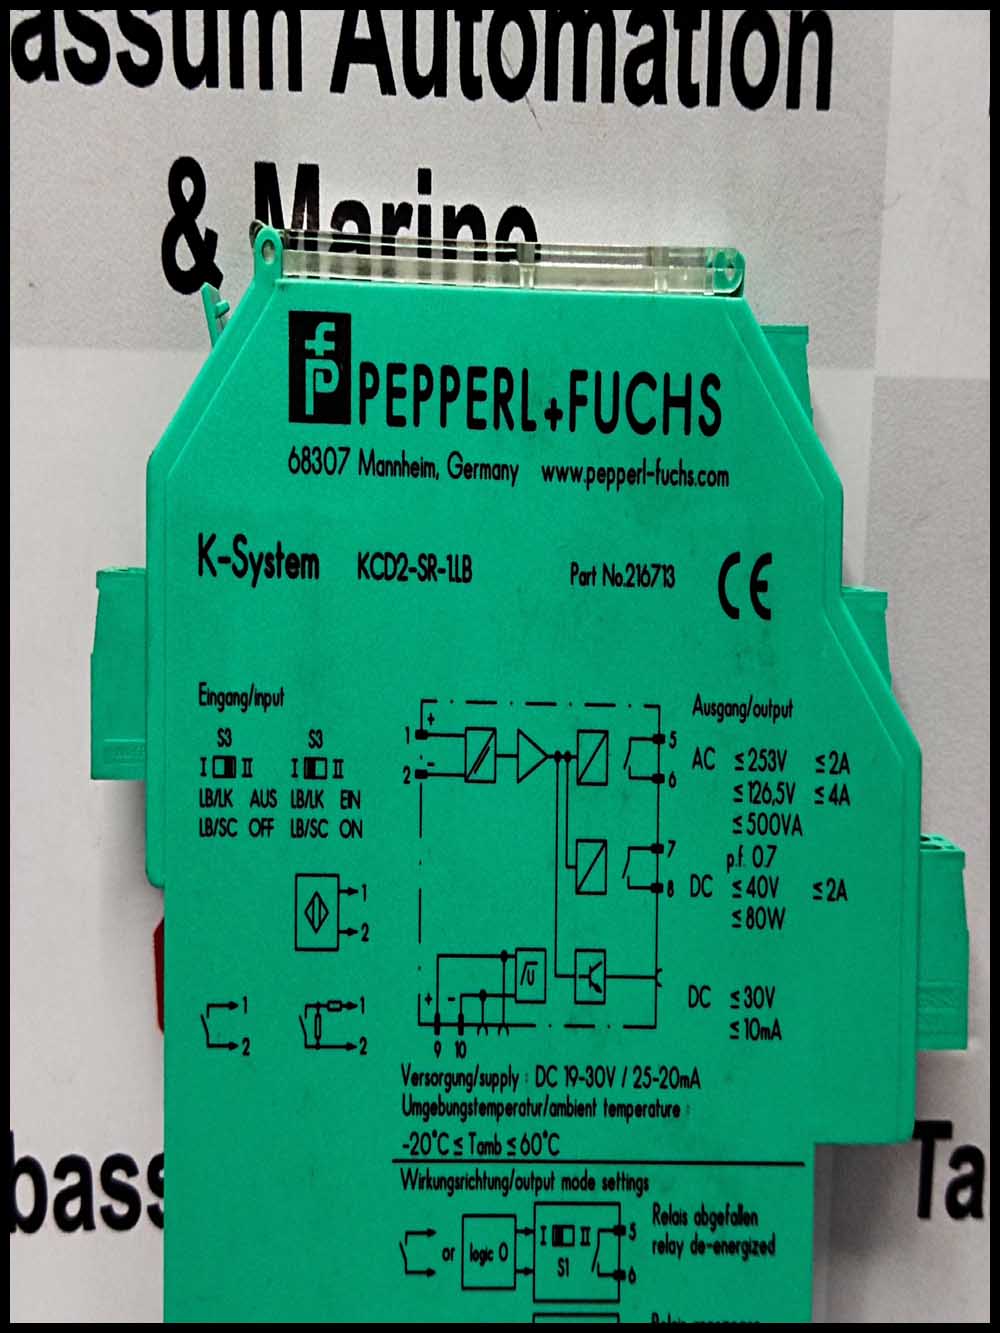 PEPPREL-FUCHS KCD2-SR-1.LB